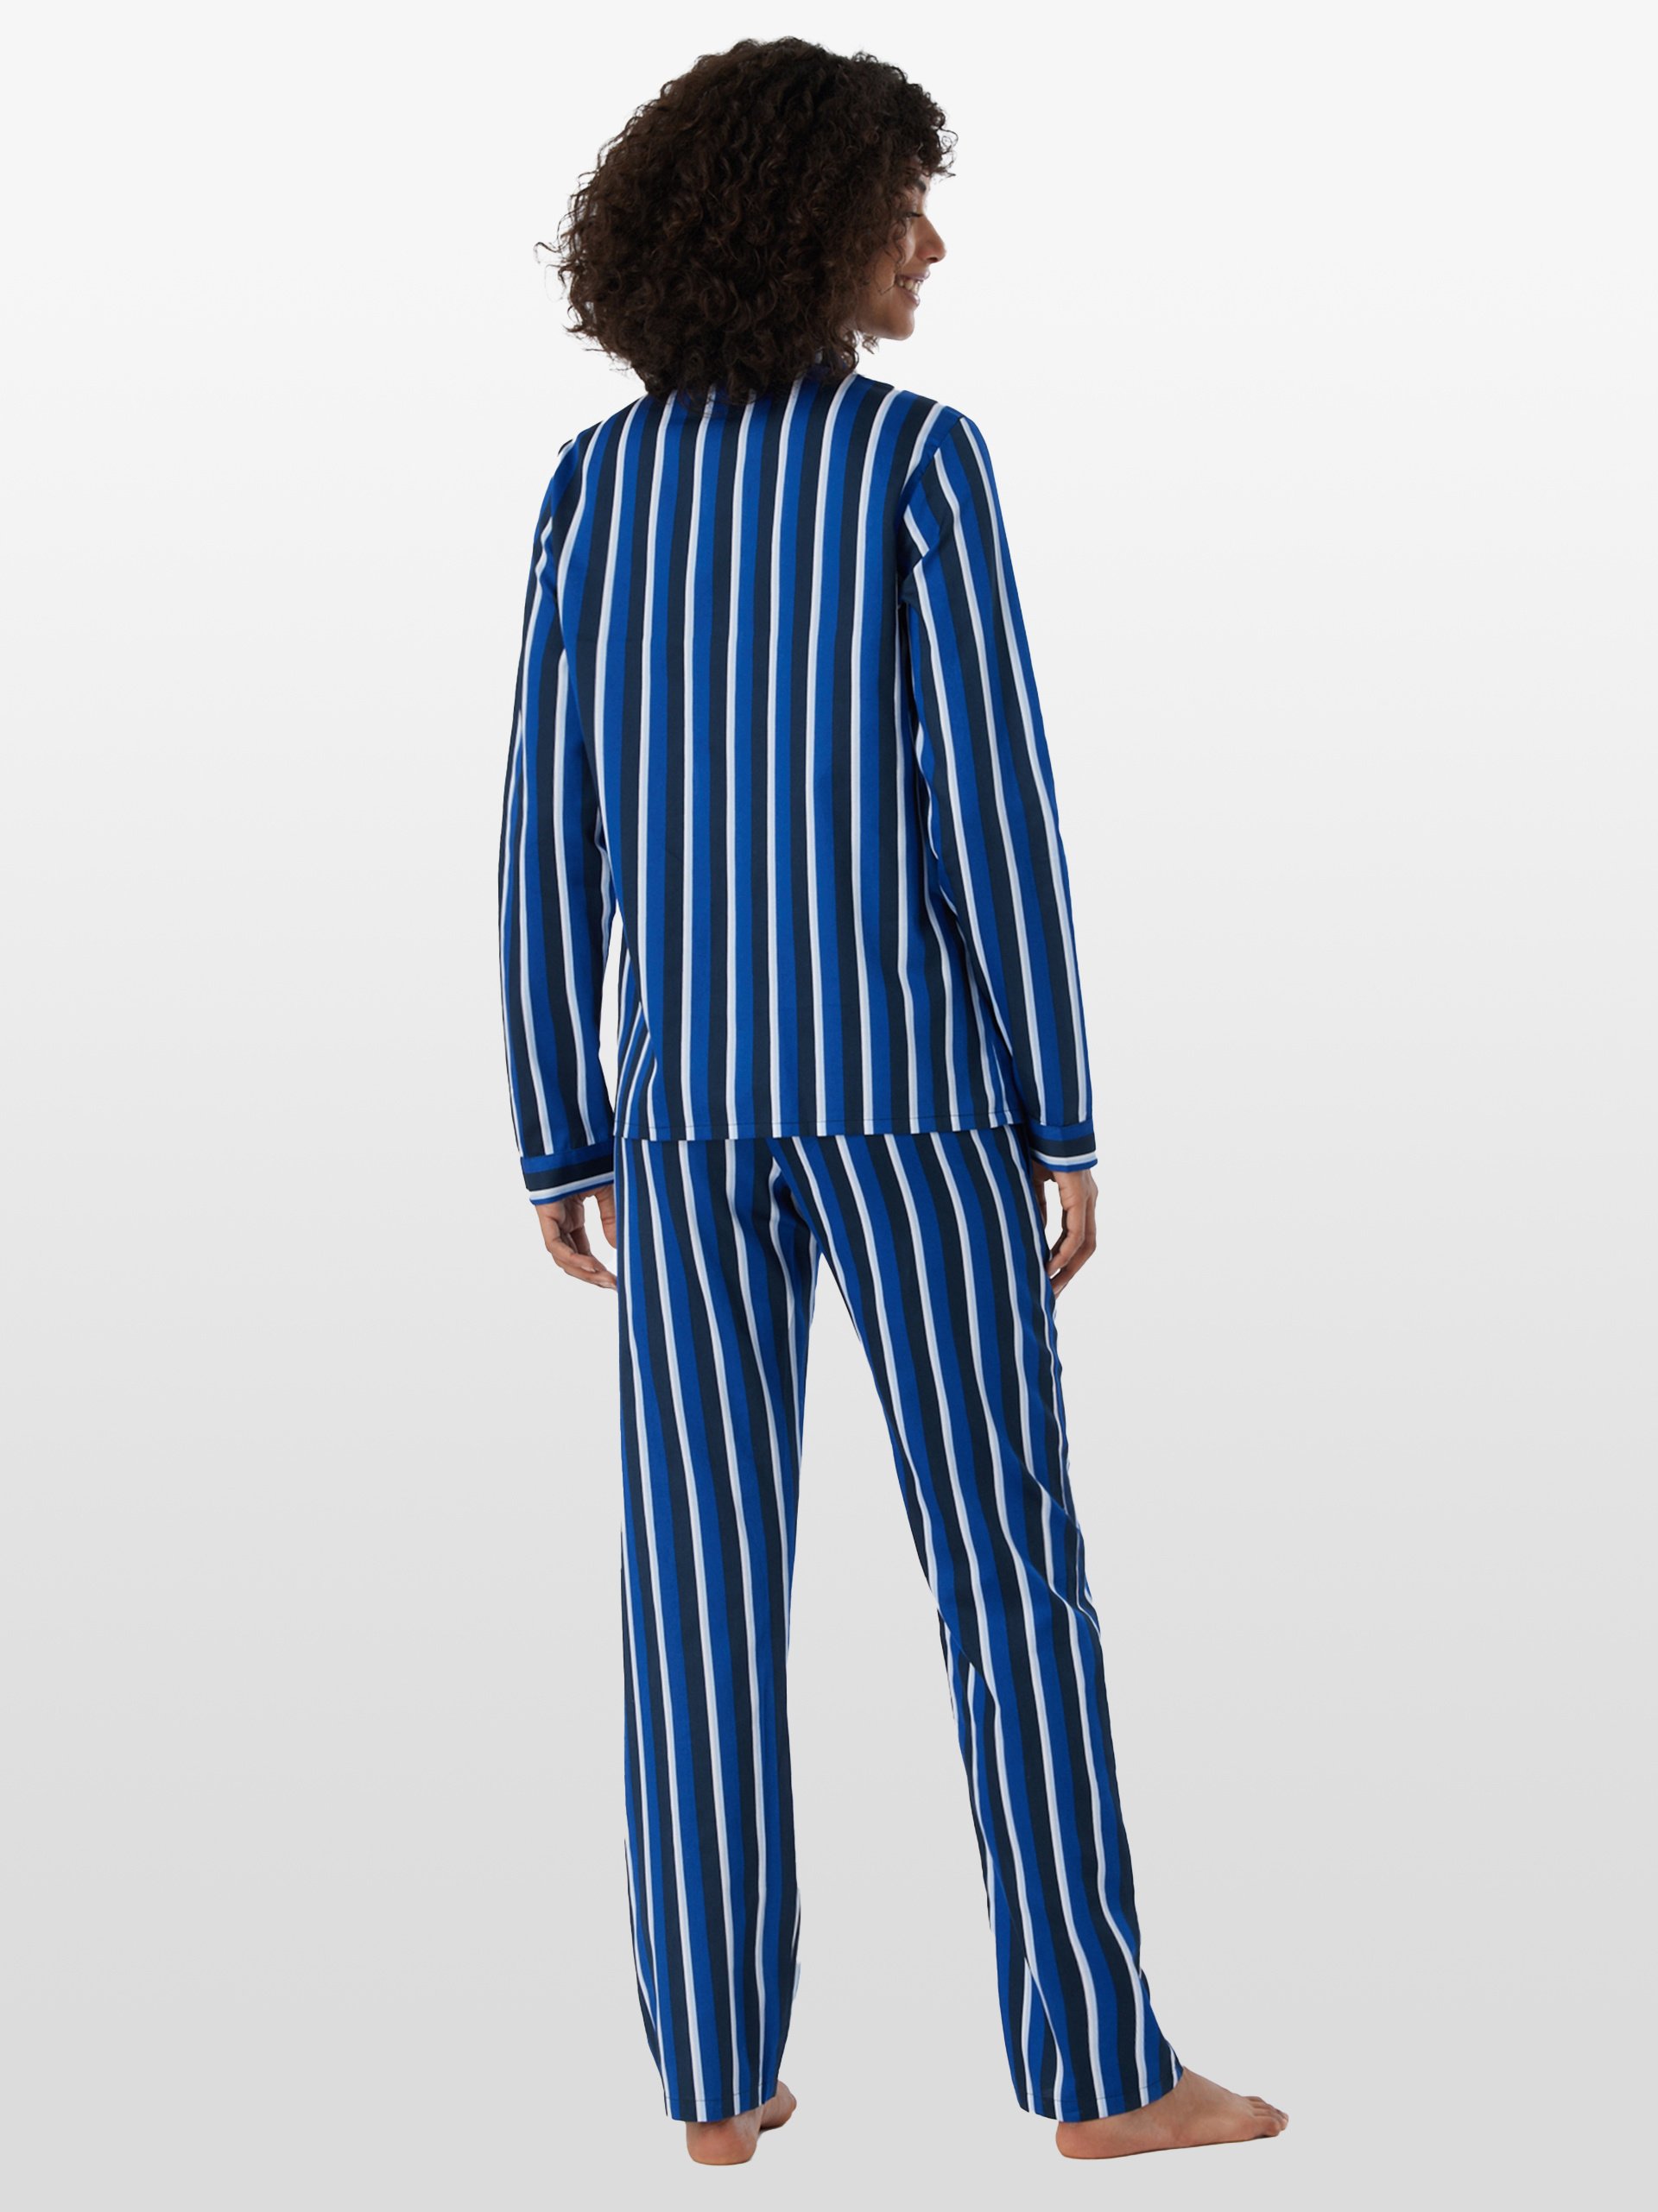 selected Damen - Schiesser premium kaufen online Pyjama inspiration